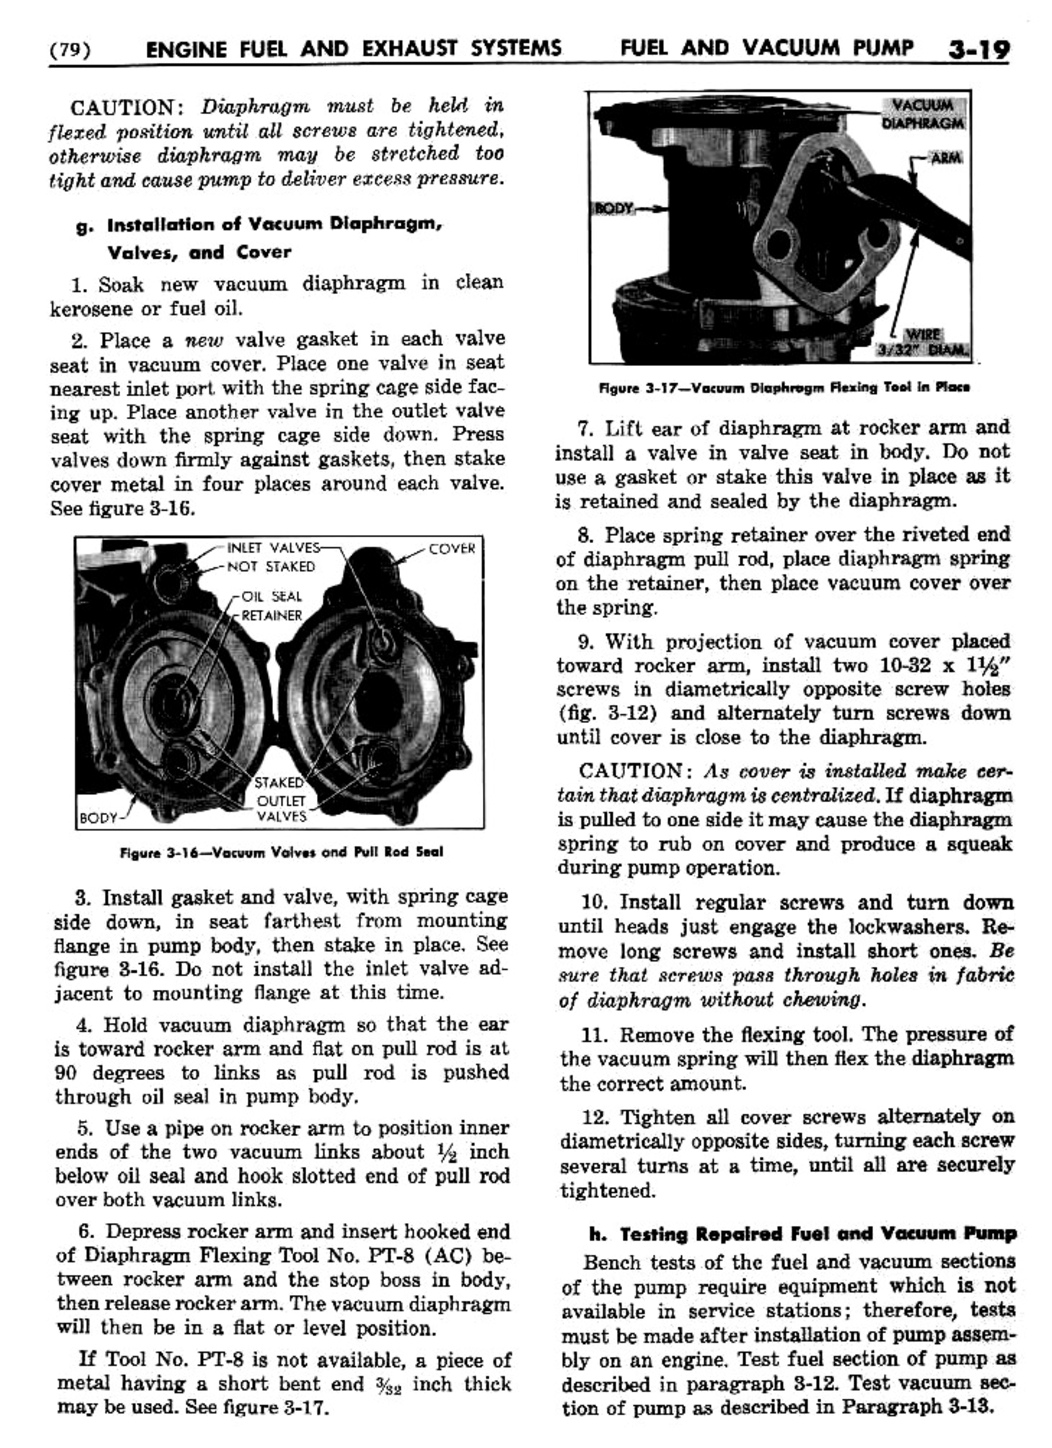 n_04 1955 Buick Shop Manual - Engine Fuel & Exhaust-019-019.jpg